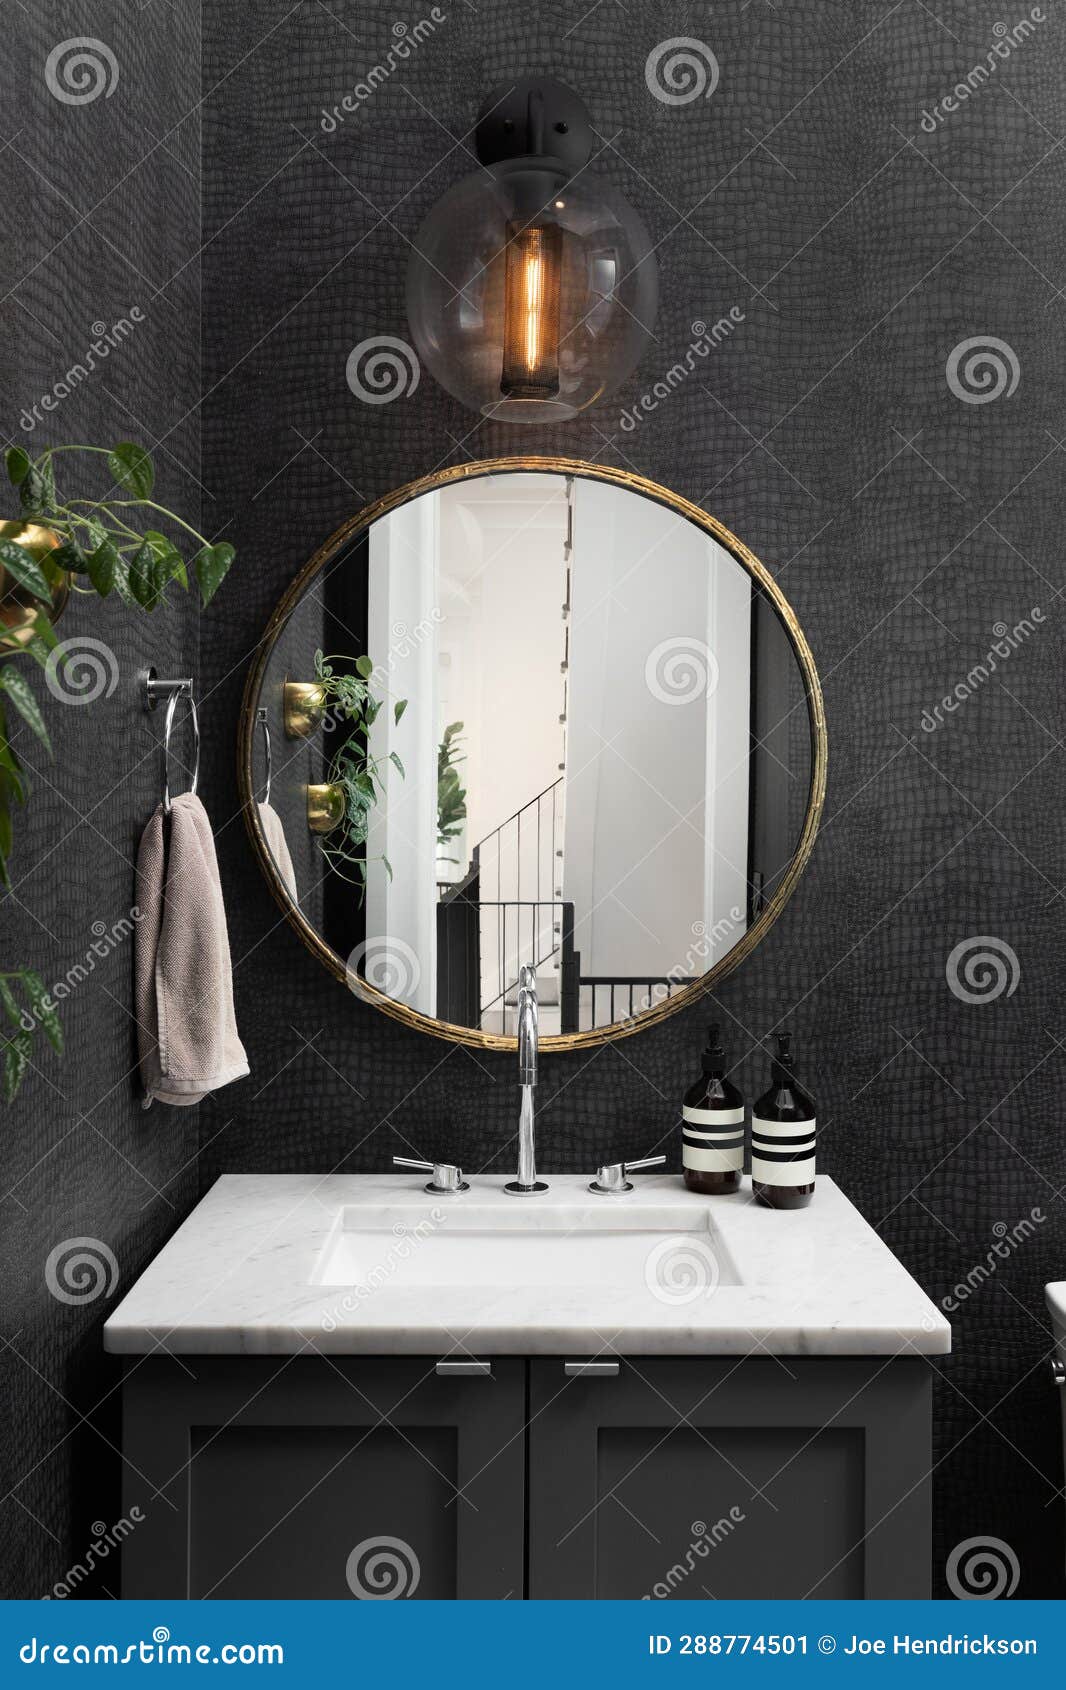 https://thumbs.dreamstime.com/z/bathroom-black-snake-skin-wallpaper-gold-circular-mirror-marble-countertop-grey-cabinet-modern-light-fixture-288774501.jpg